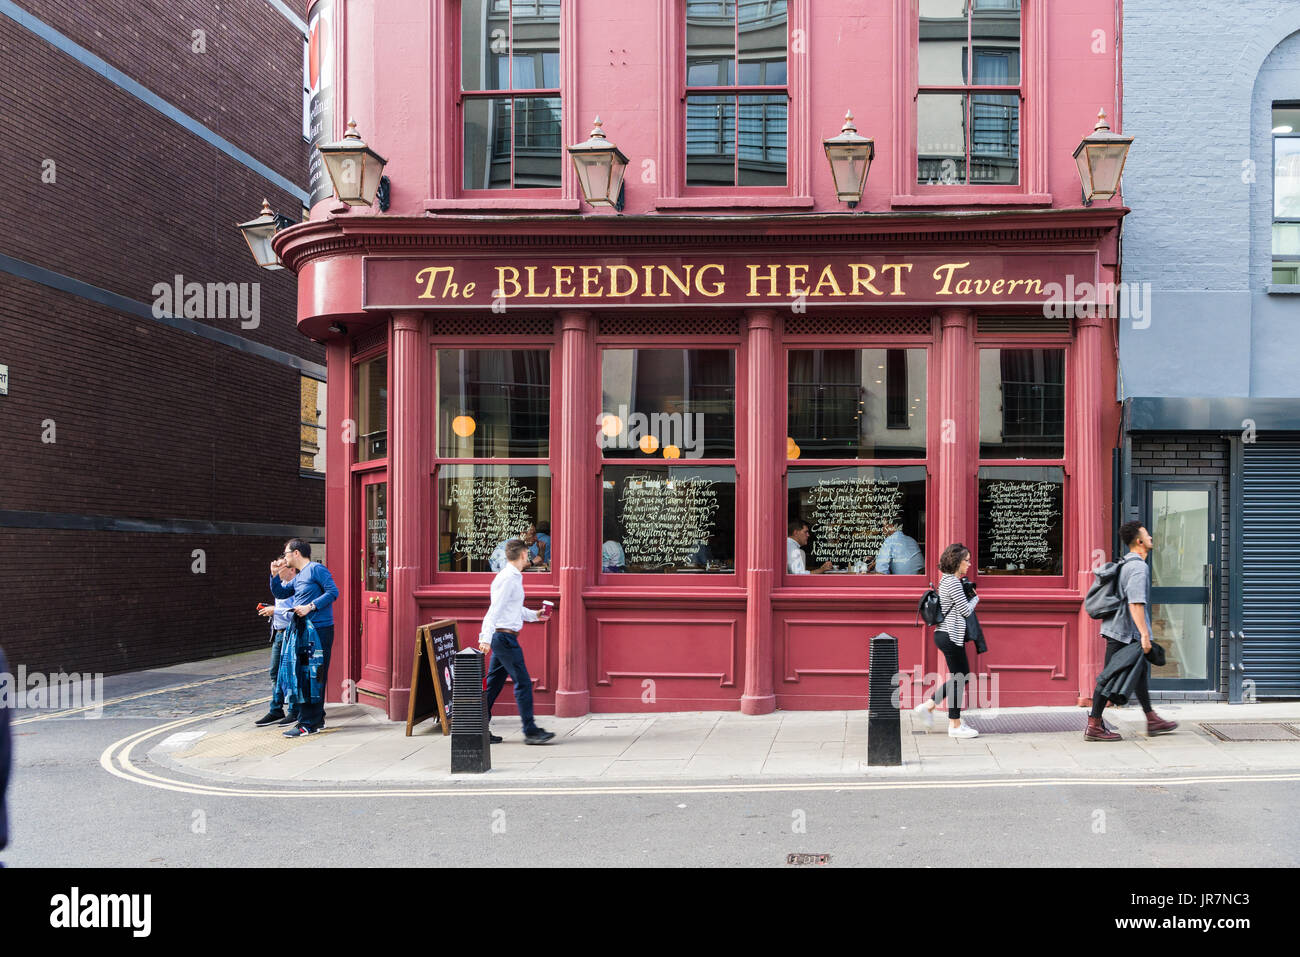 The Bleeding Heart Tavern, Greville Street, Farringdon, London Stock Photo